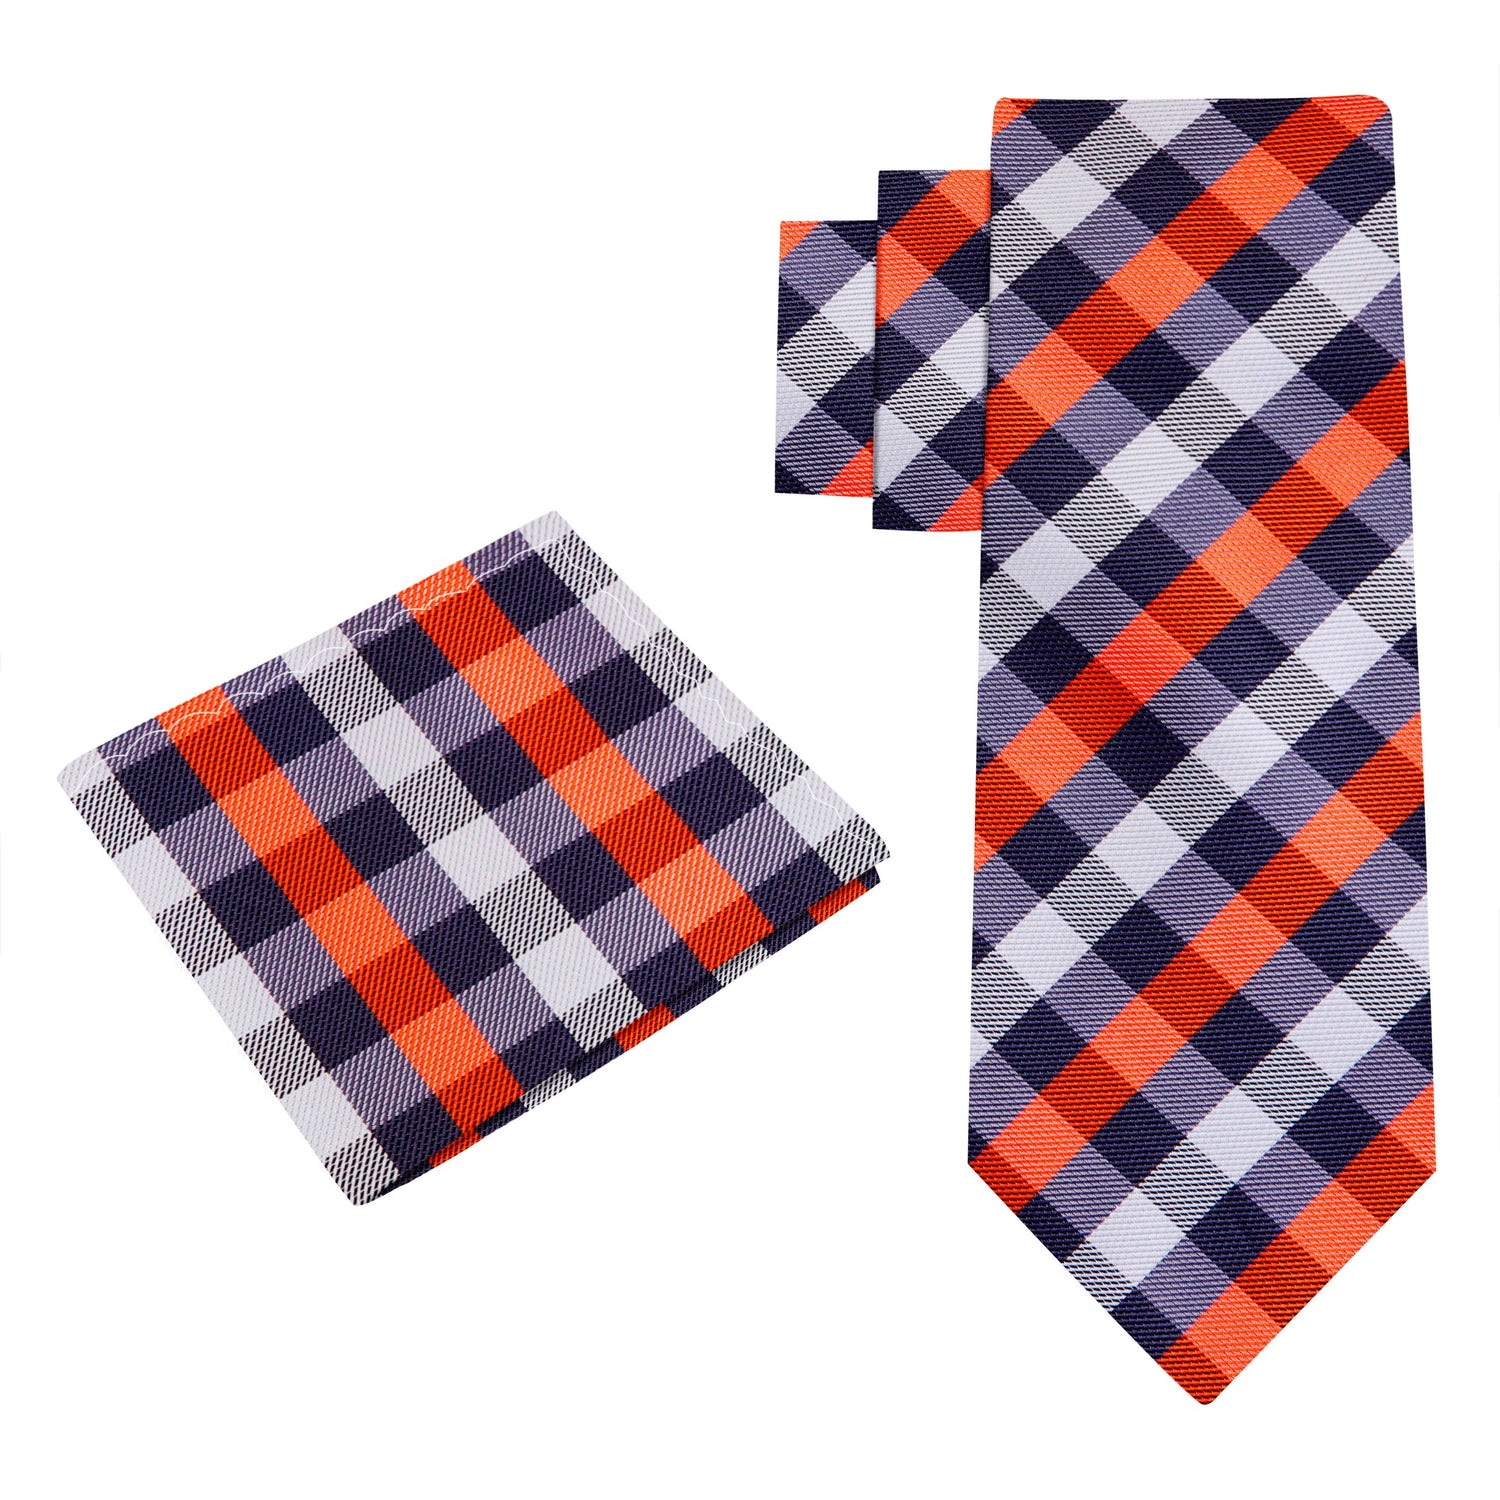 Alt View: A Orange, Grey, White Small Geometric Checker Pattern Silk Necktie, With Matching Pocket Square